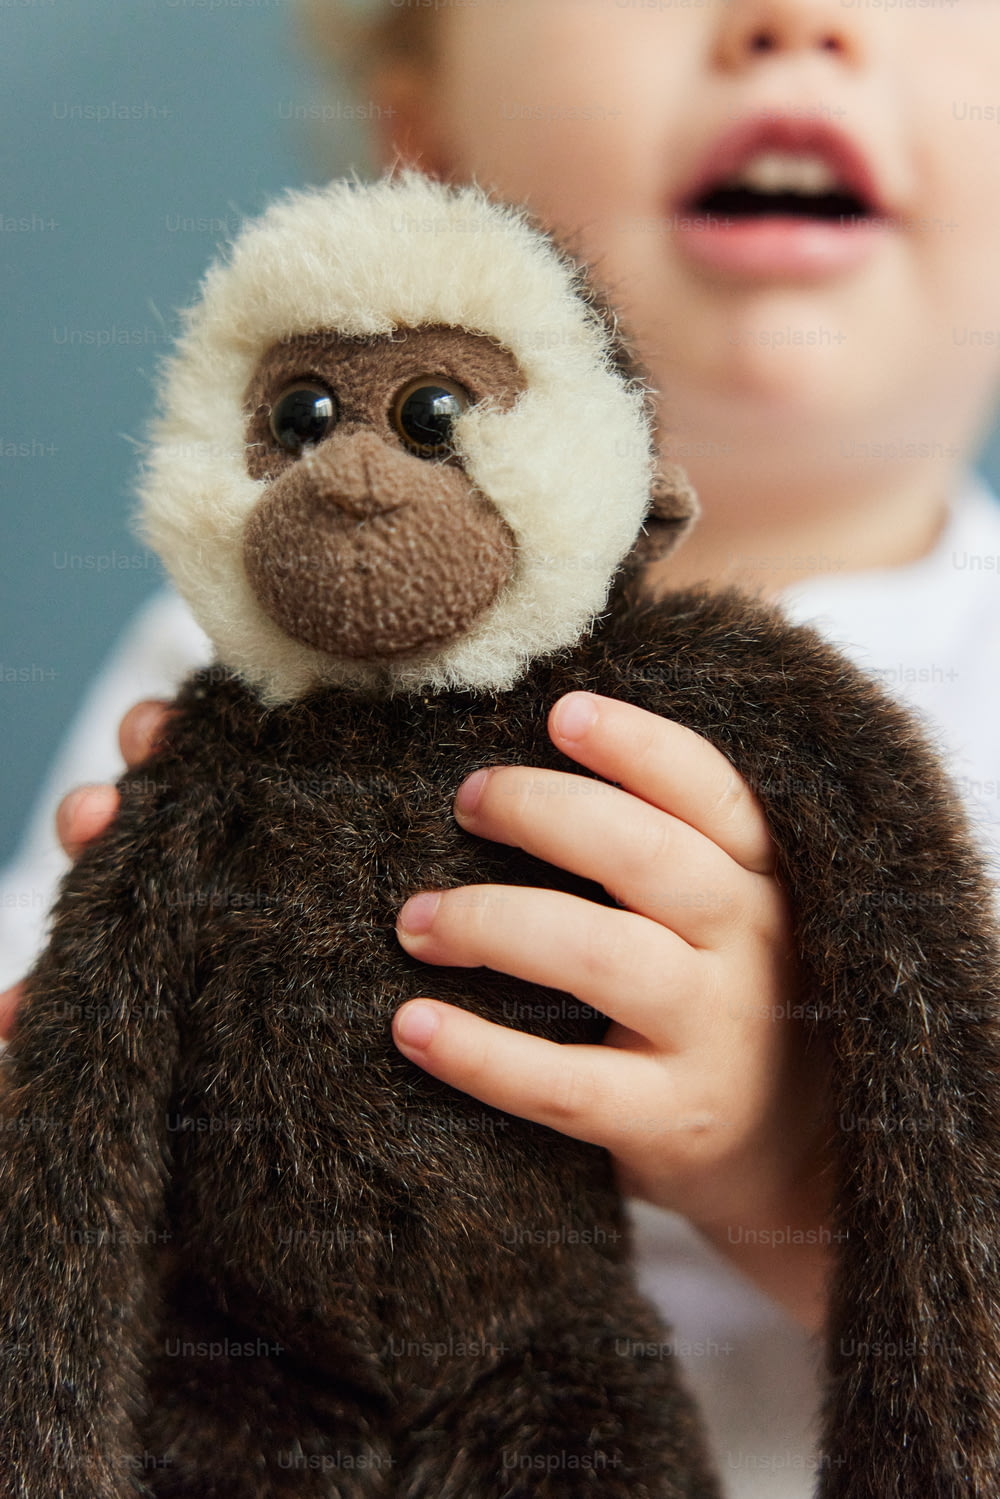 a little boy holding a stuffed monkey in his hands